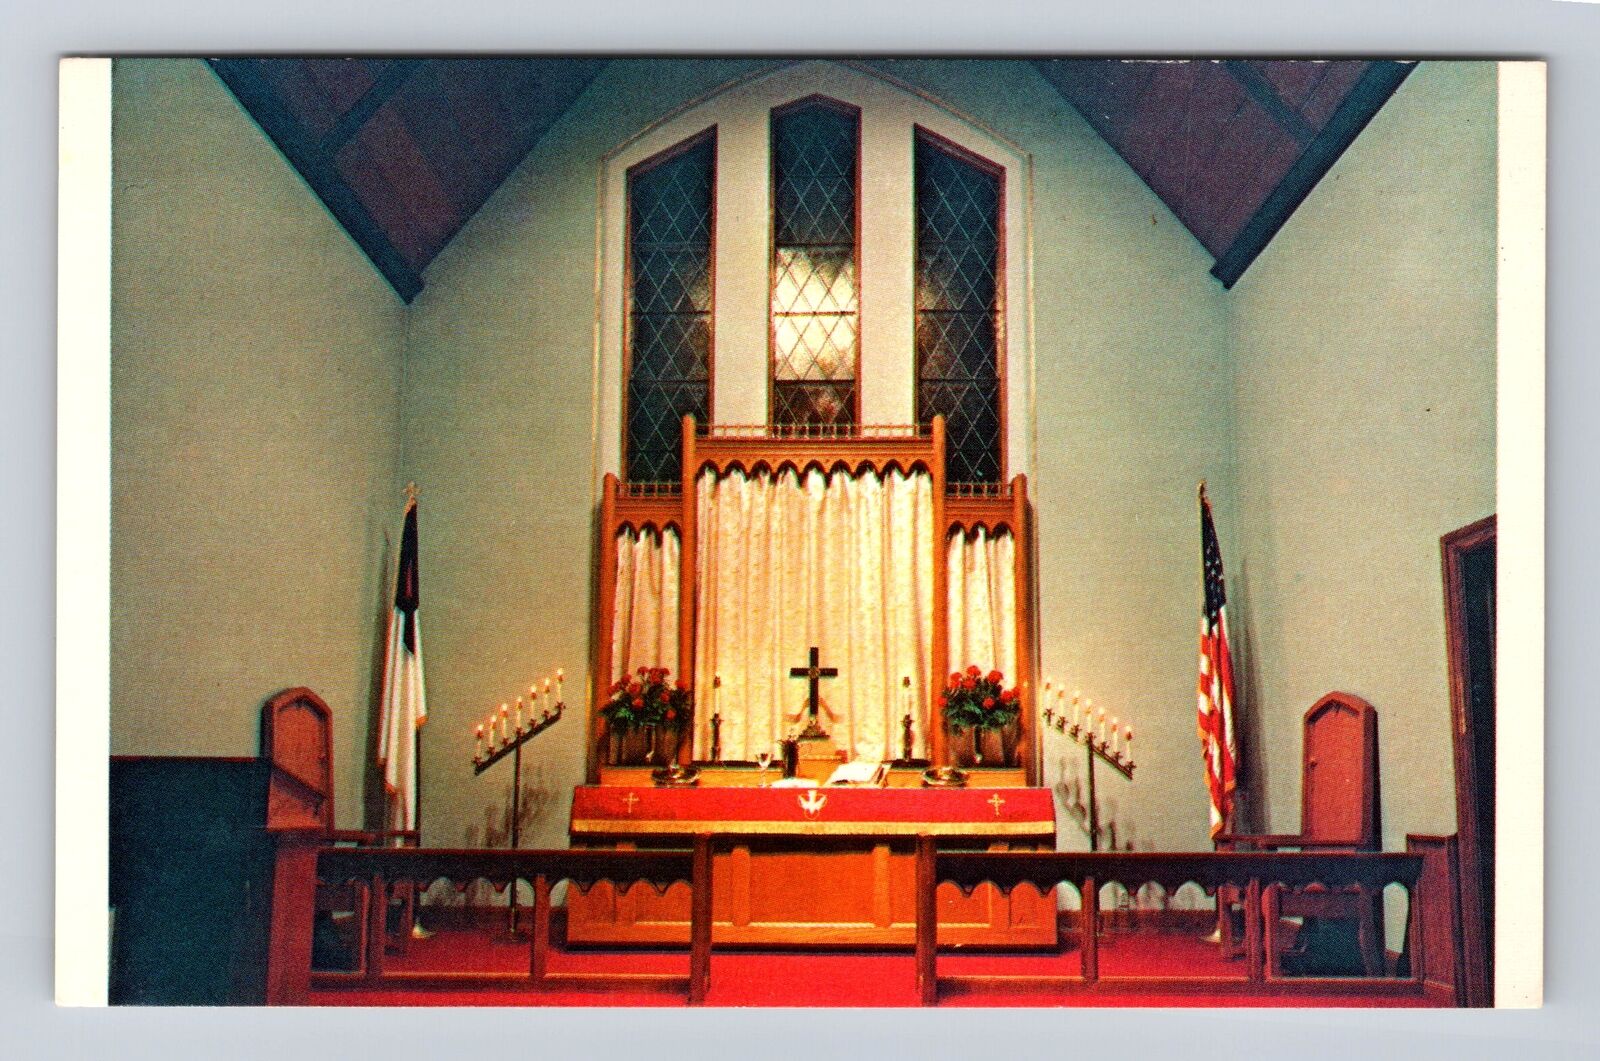 Washington Island WI-Wisconsin, Trinity Lutheran Church, Vintage Postcard